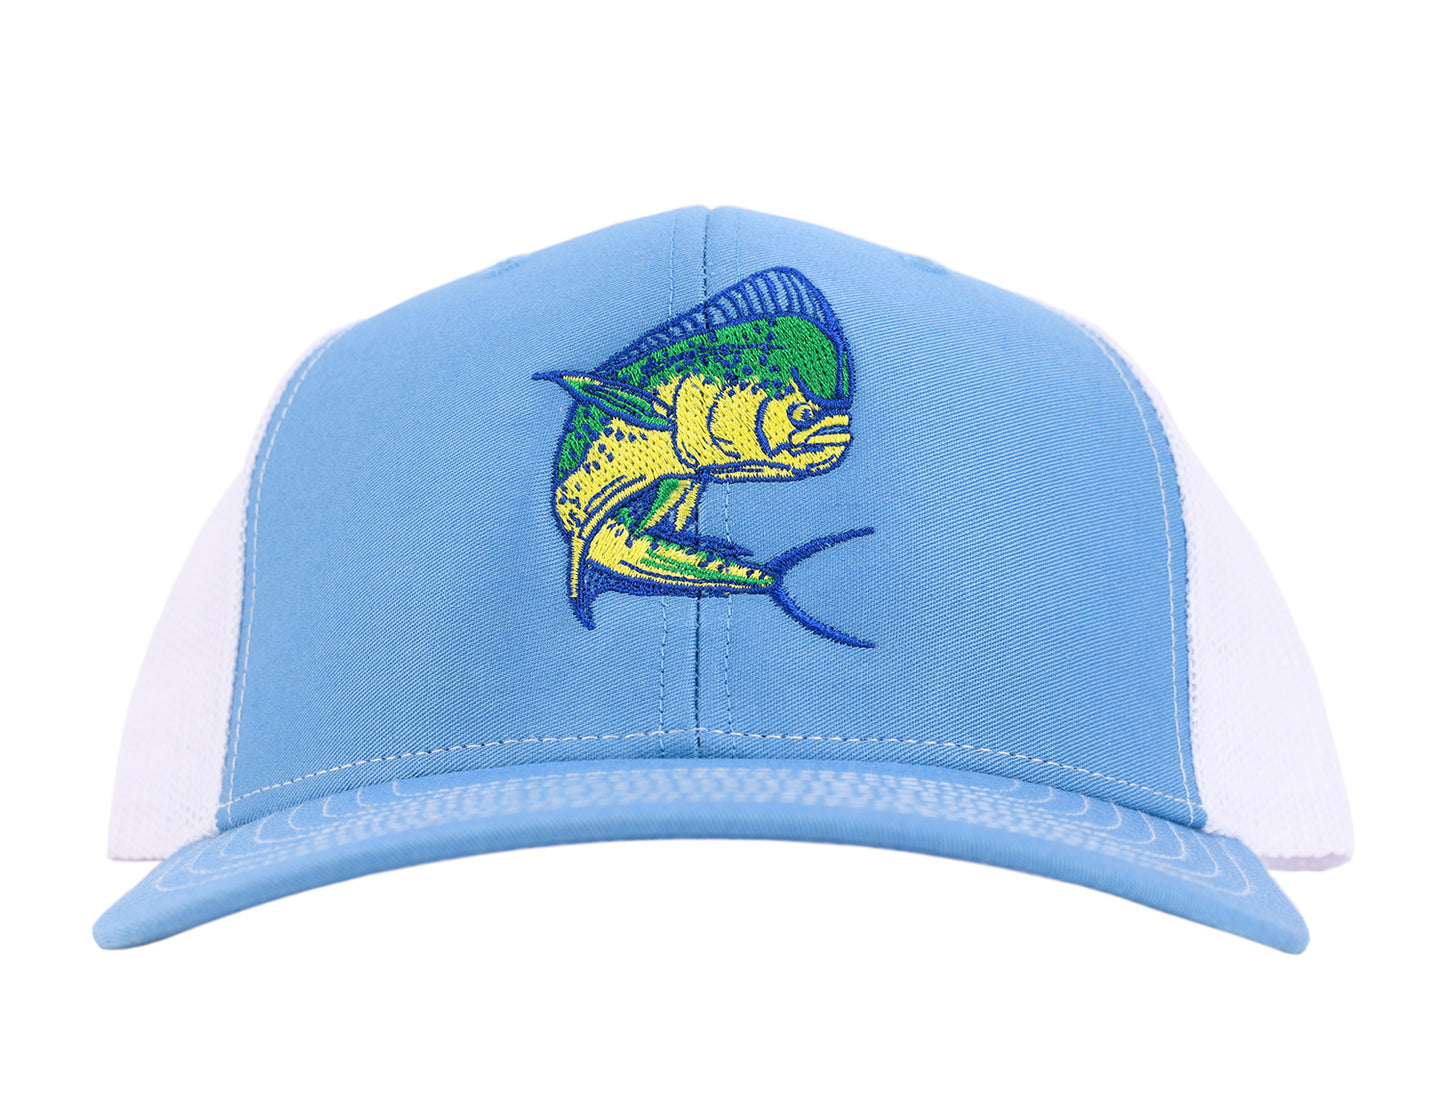 Mahi Mahi Fishing Lt Blue/White Mesh Structured Trucker hat